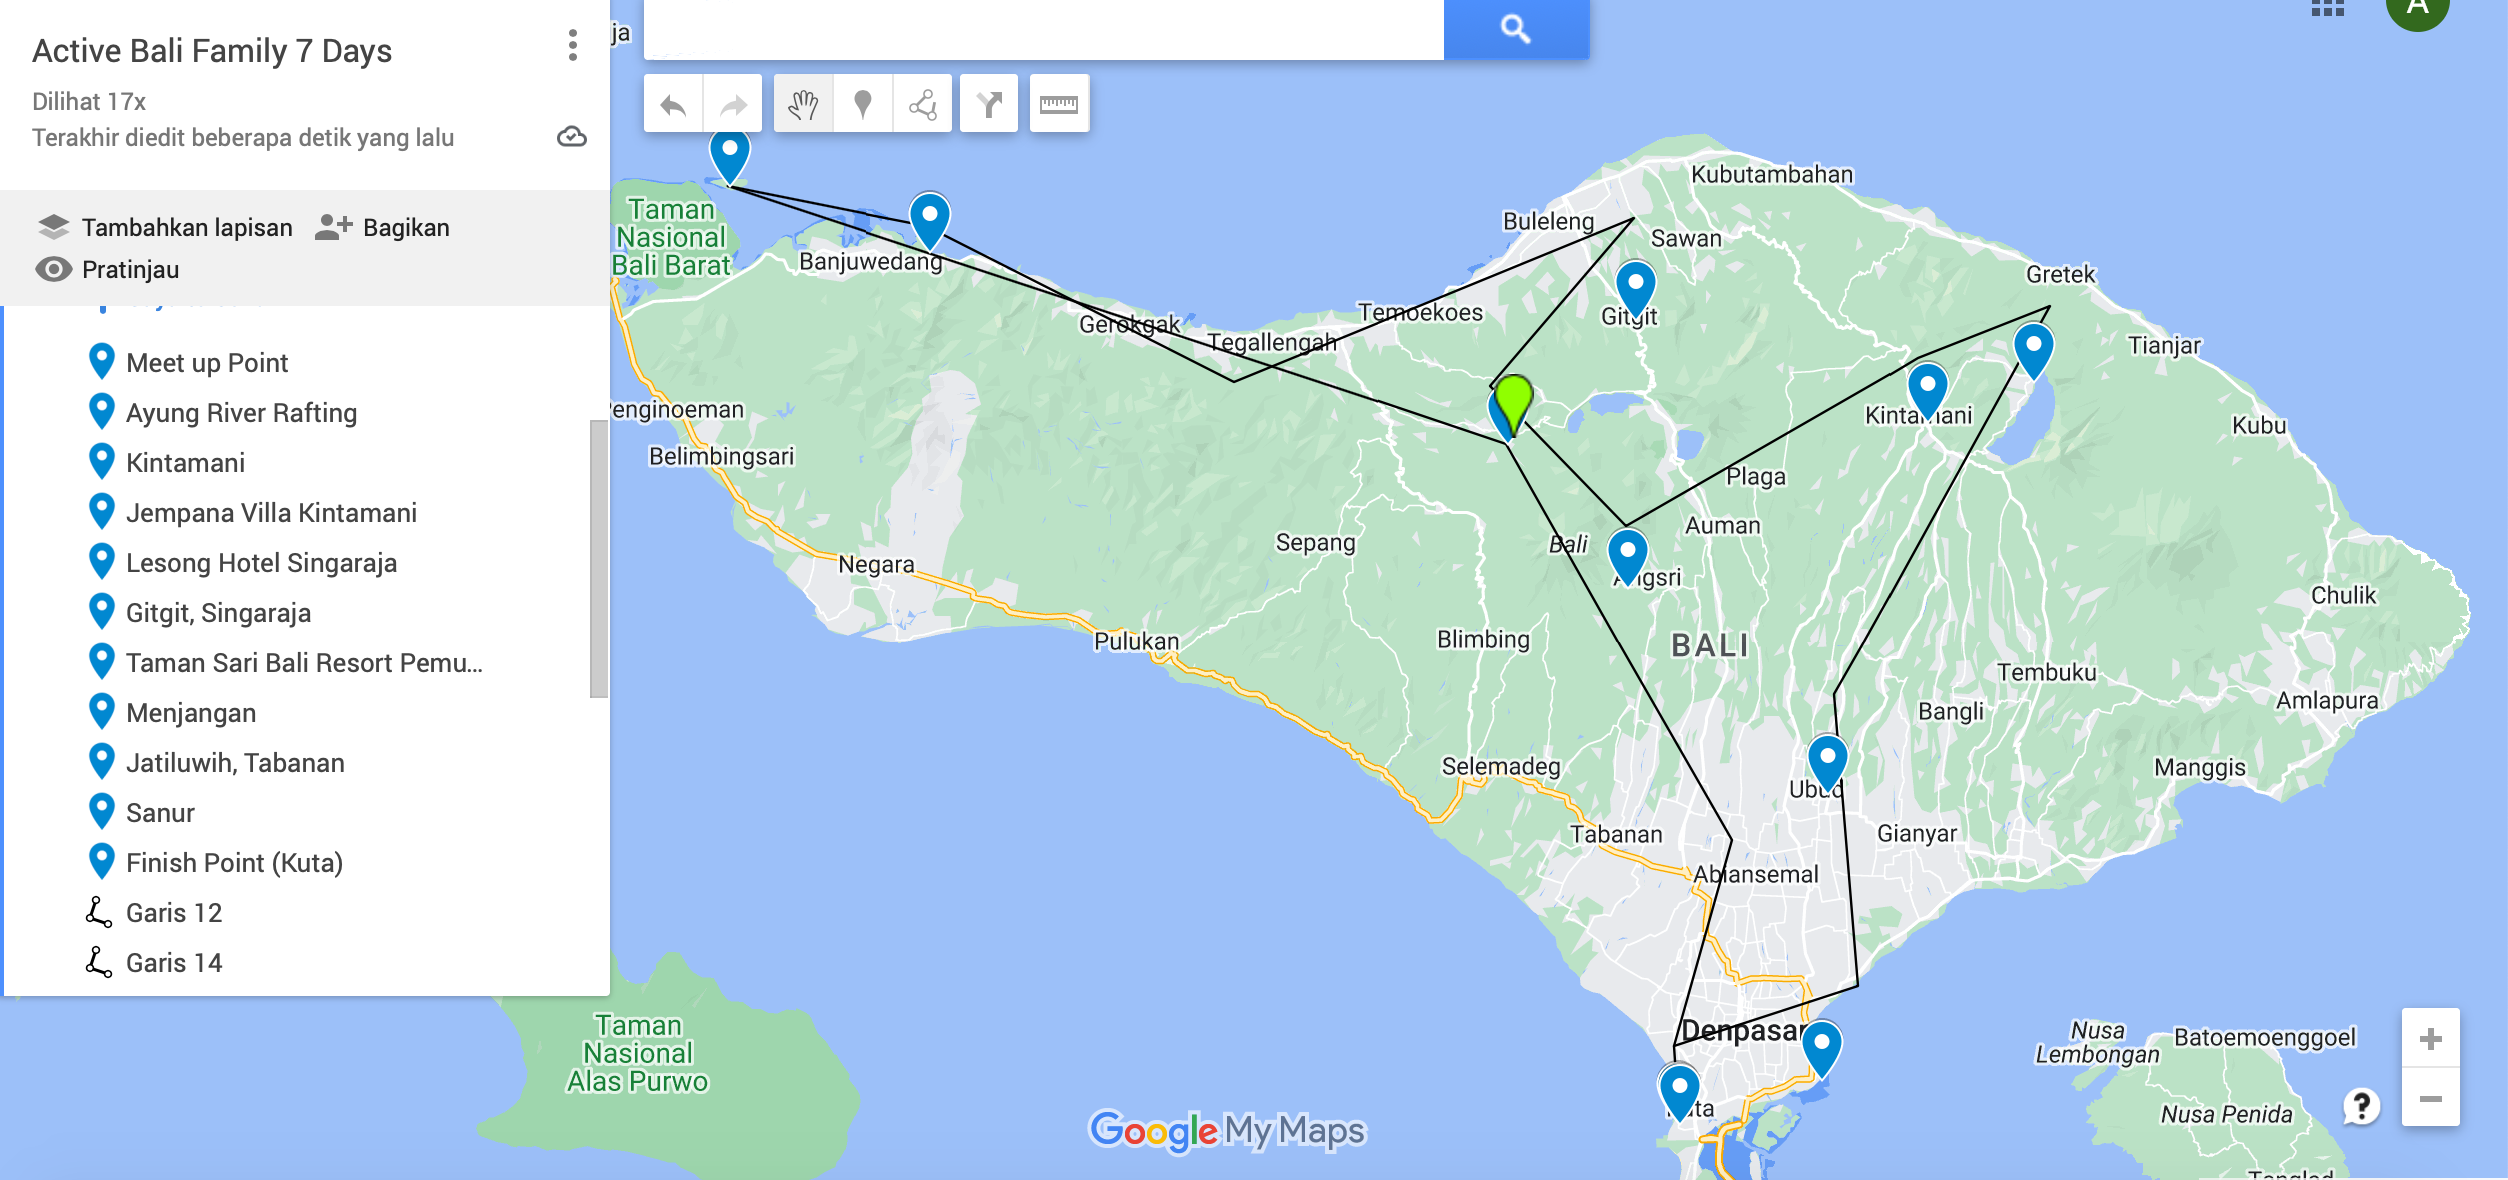 tourhub | Active Bali | Bali Adventure: A 7-Day Exclusive Tour Tailored for Active Families | Tour Map